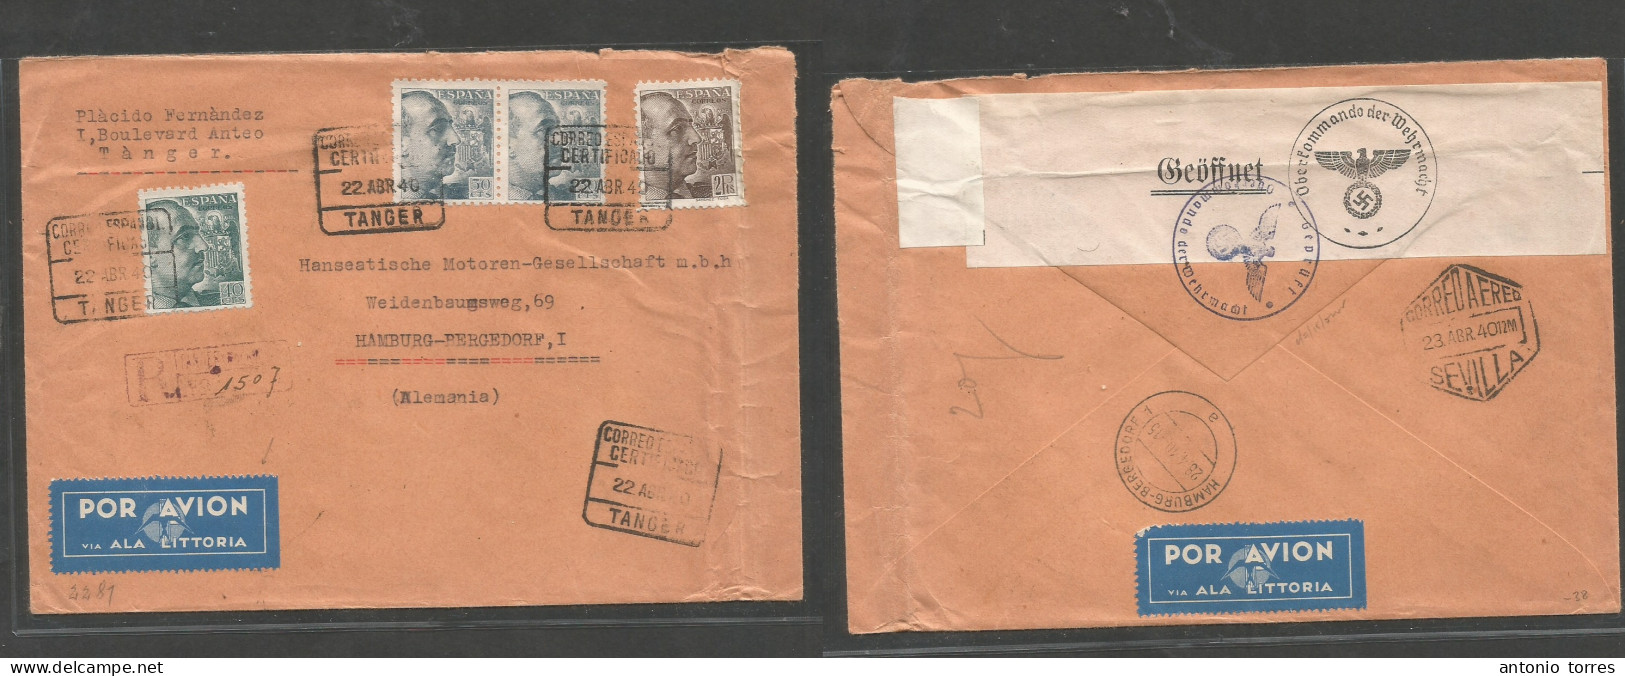 Marruecos. 1940 (22 April) Tanger, Oficina Española - Alemania, Hamburgo (28 April) Via Sevilla / Tablada Correo Aereo. - Maroc (1956-...)